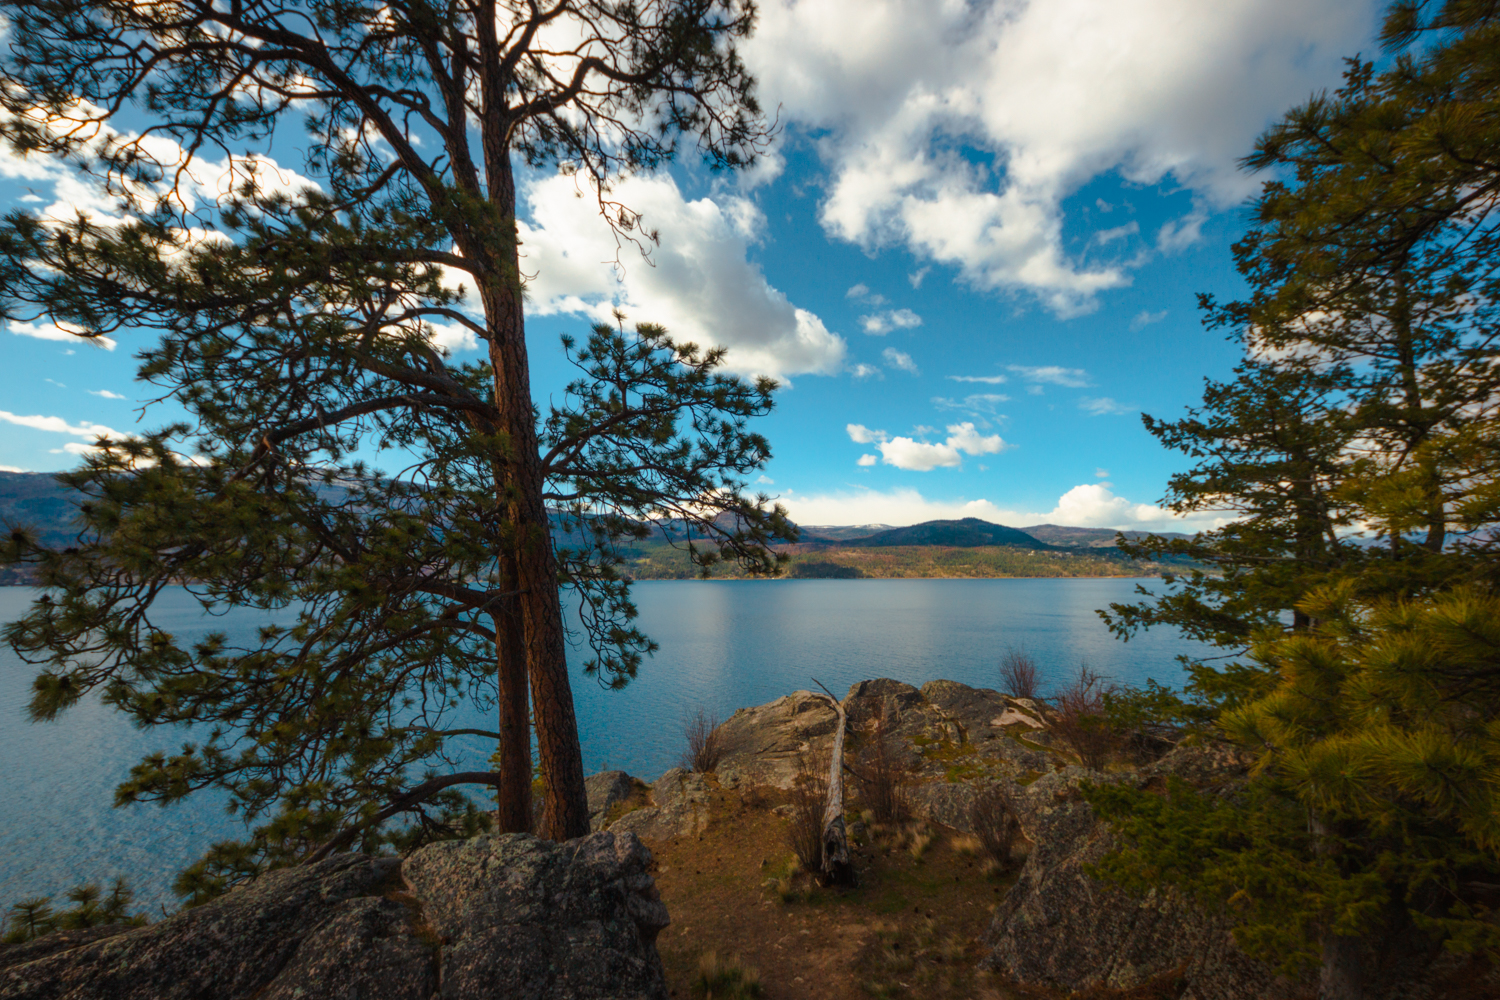 View through the trees of Okanagan Lake